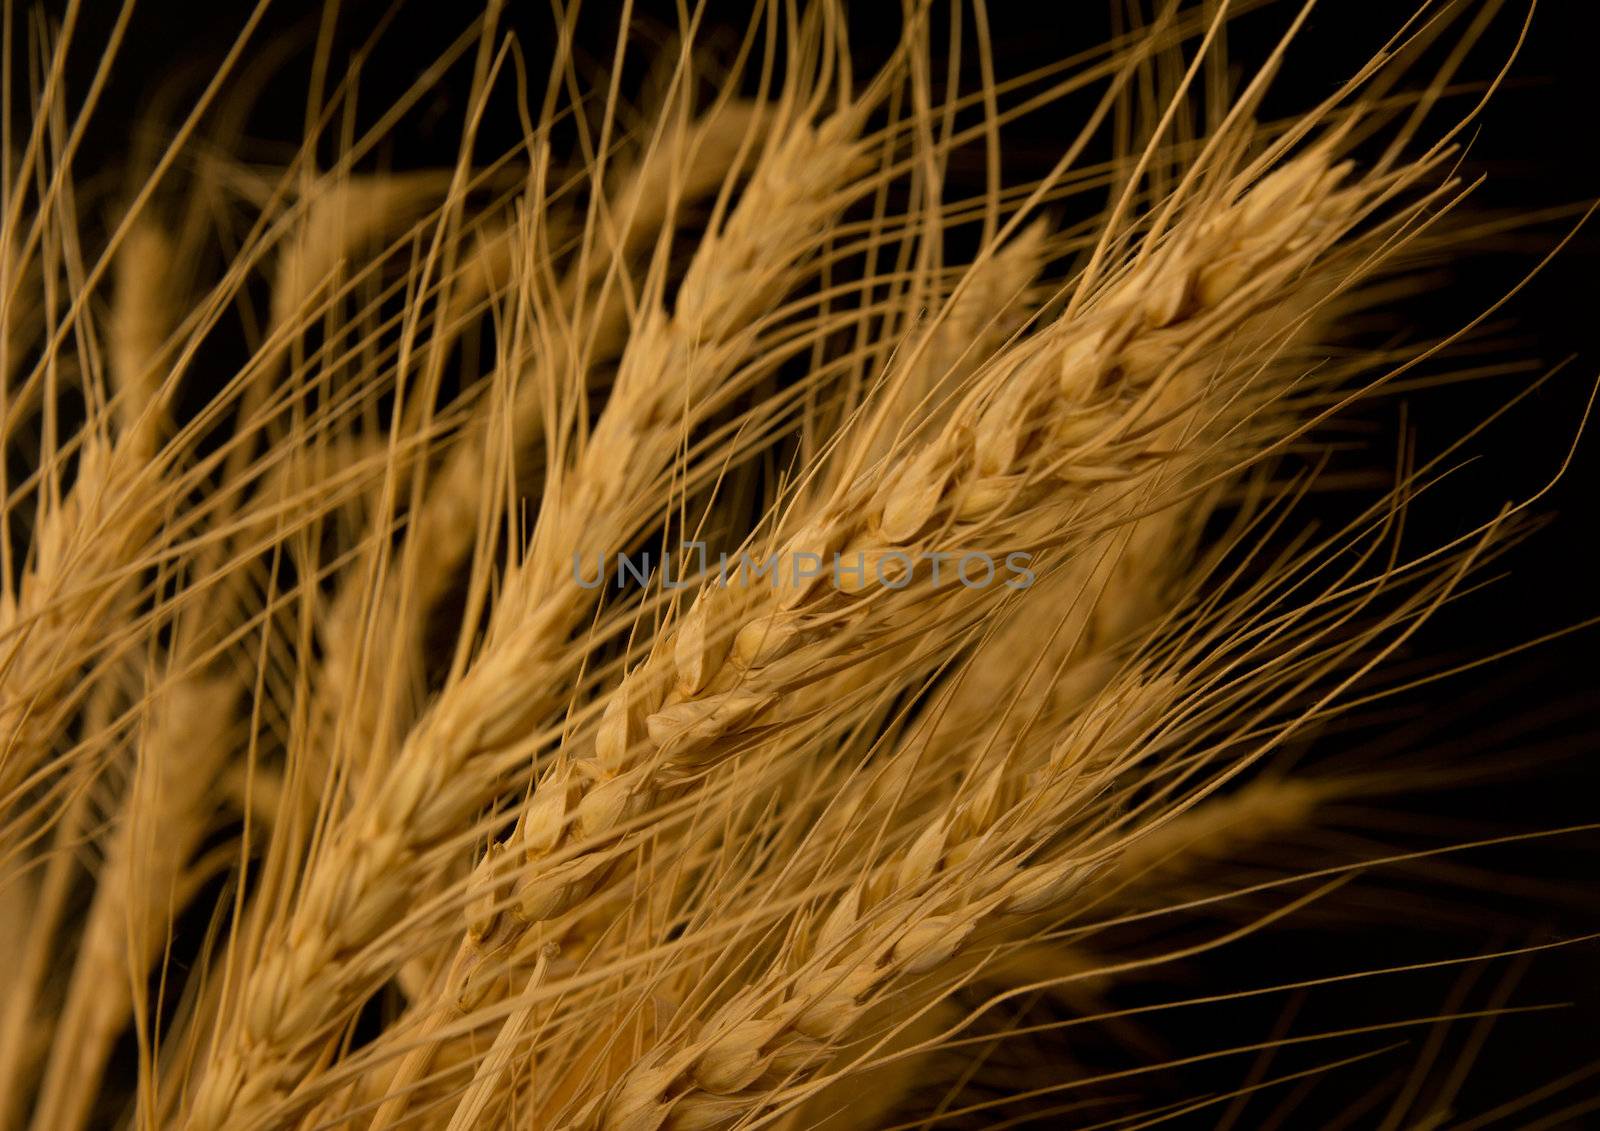 Yellow wheat on a black background by schankz